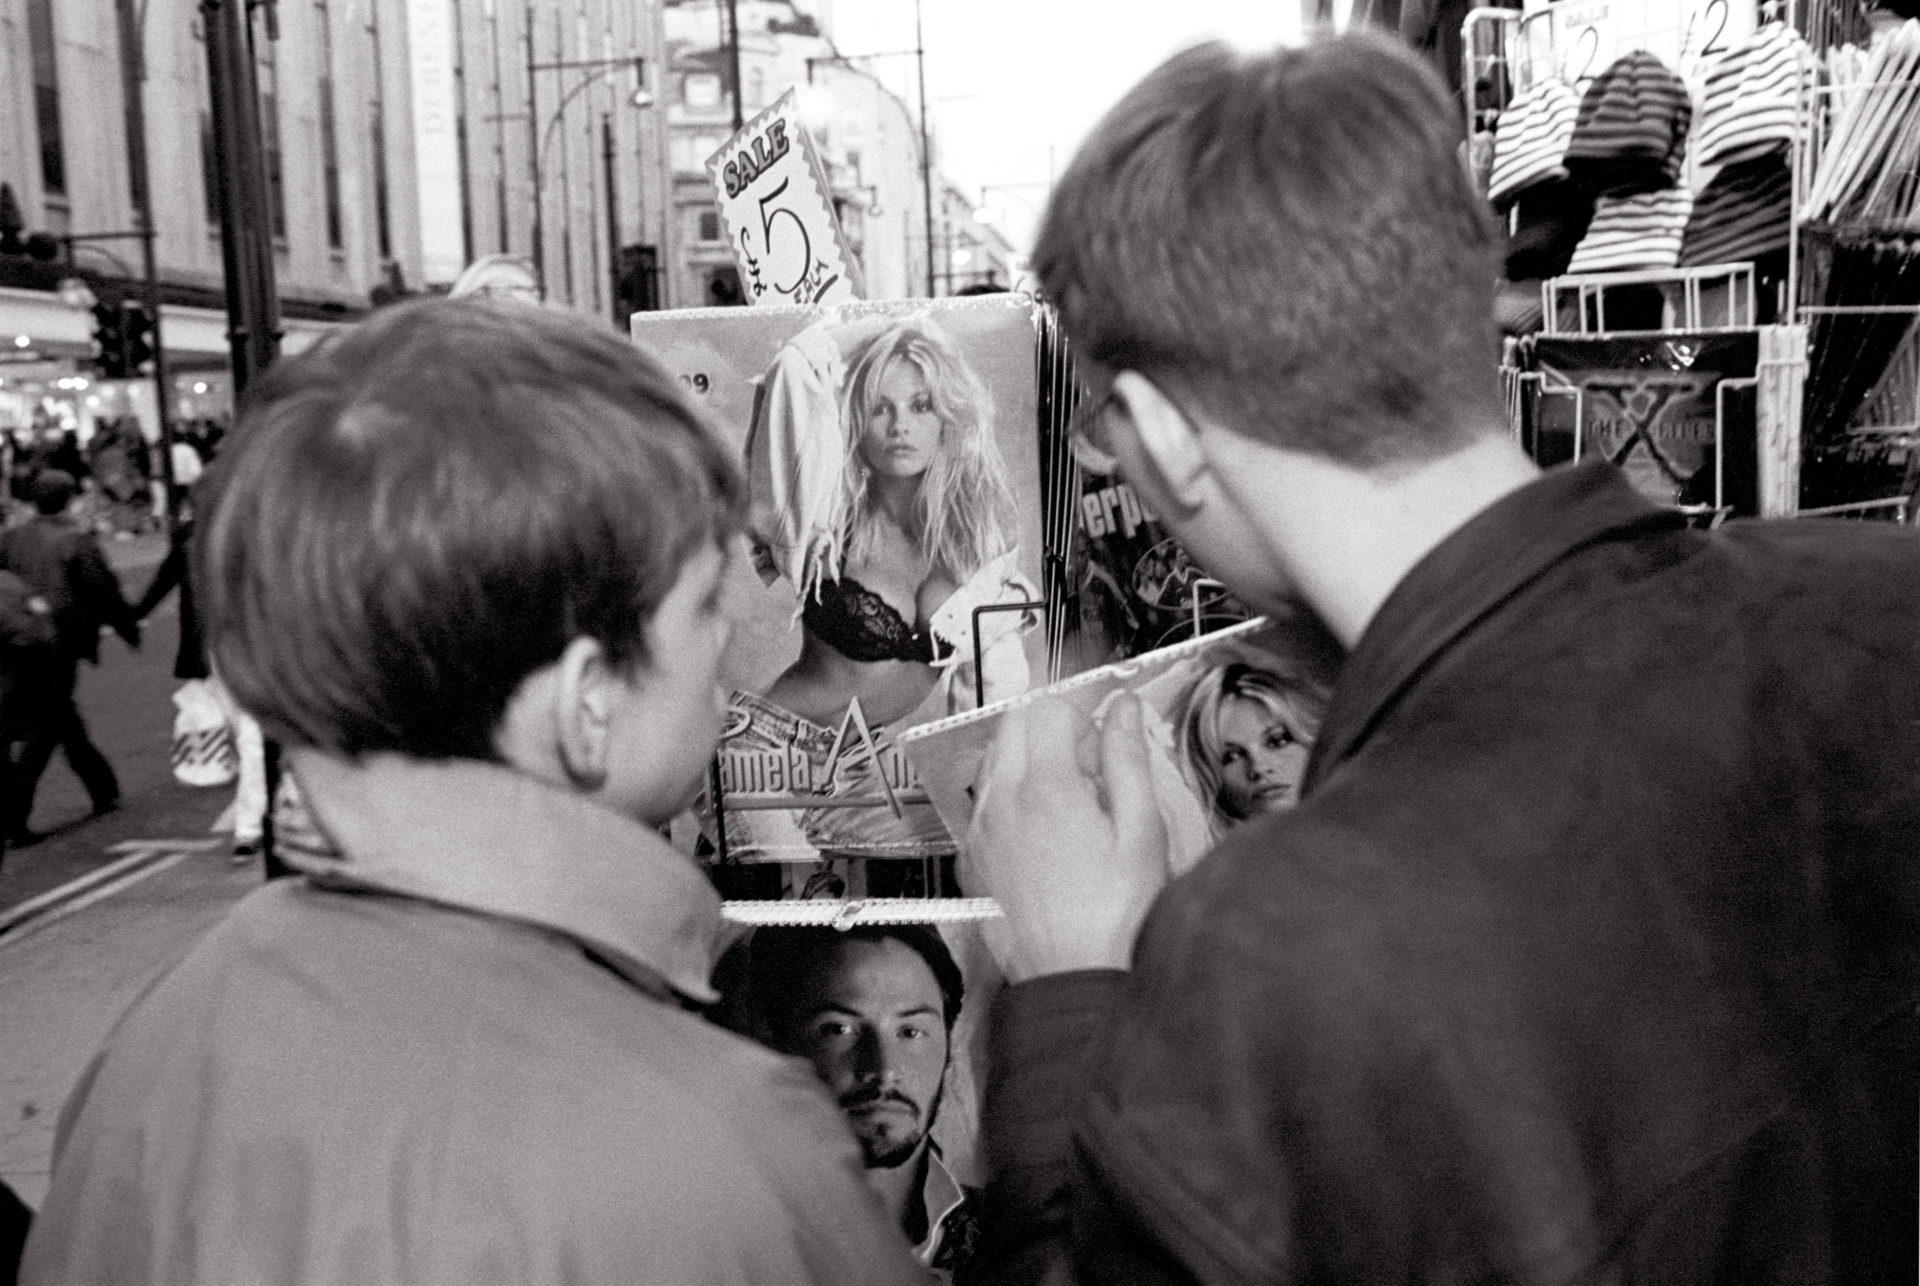 Boys looking at Pamela Anderson calendar in Oxford street London 